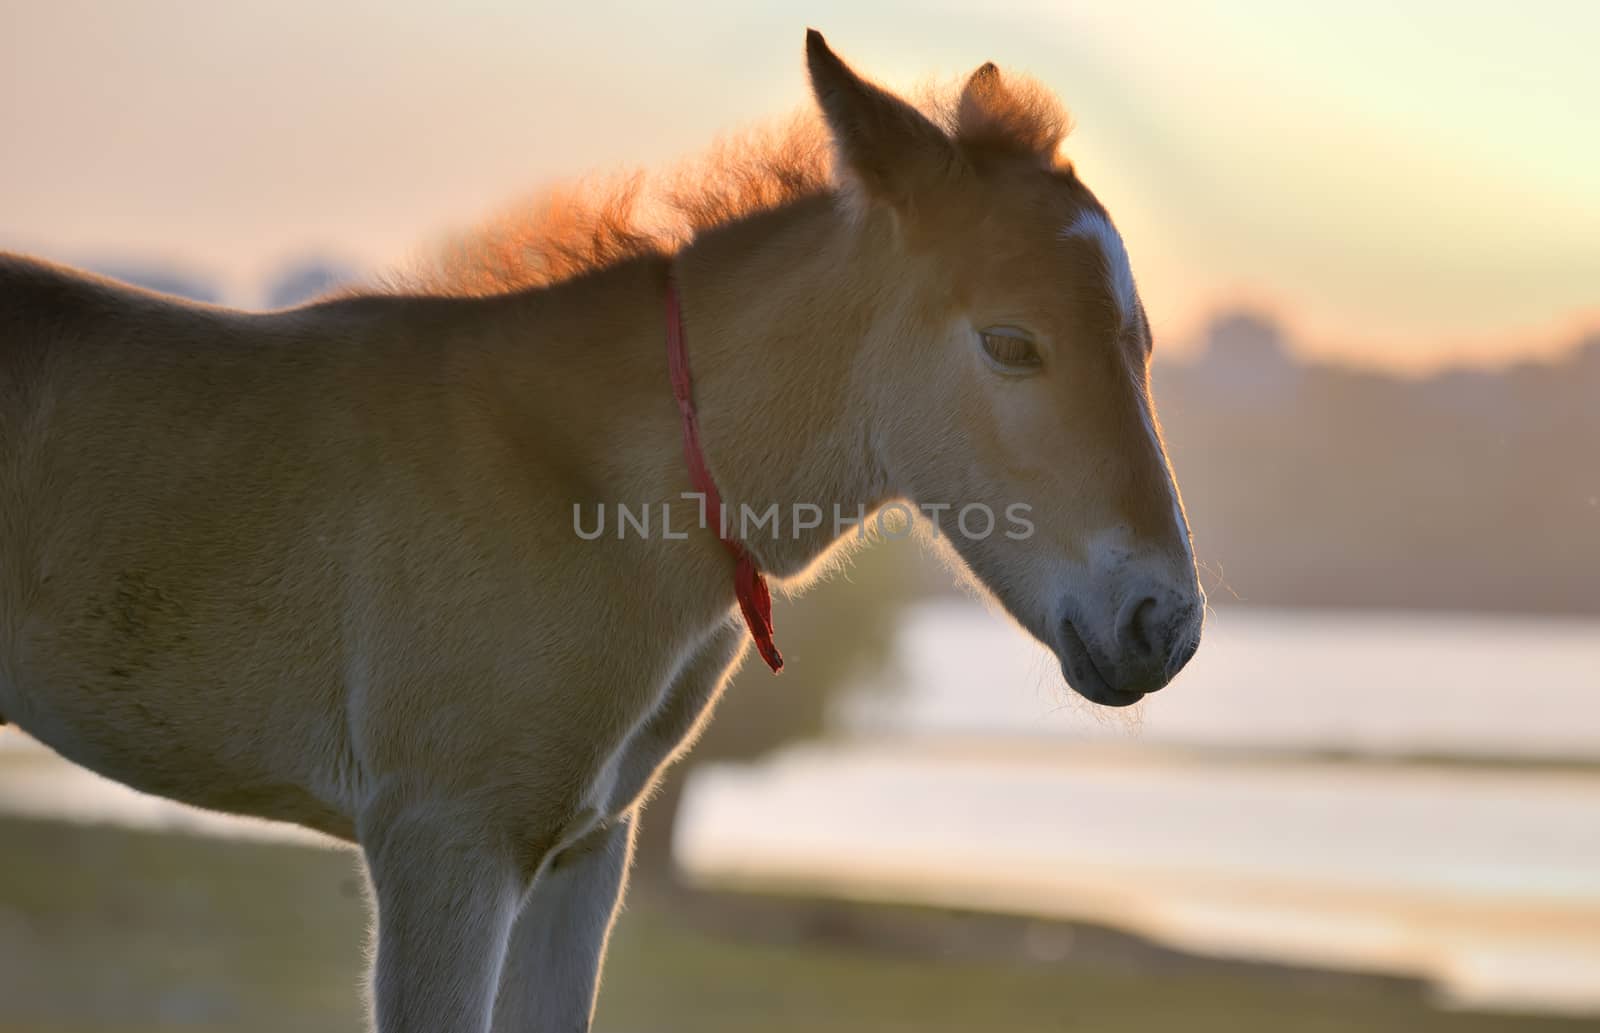 New young foal on field by jordachelr